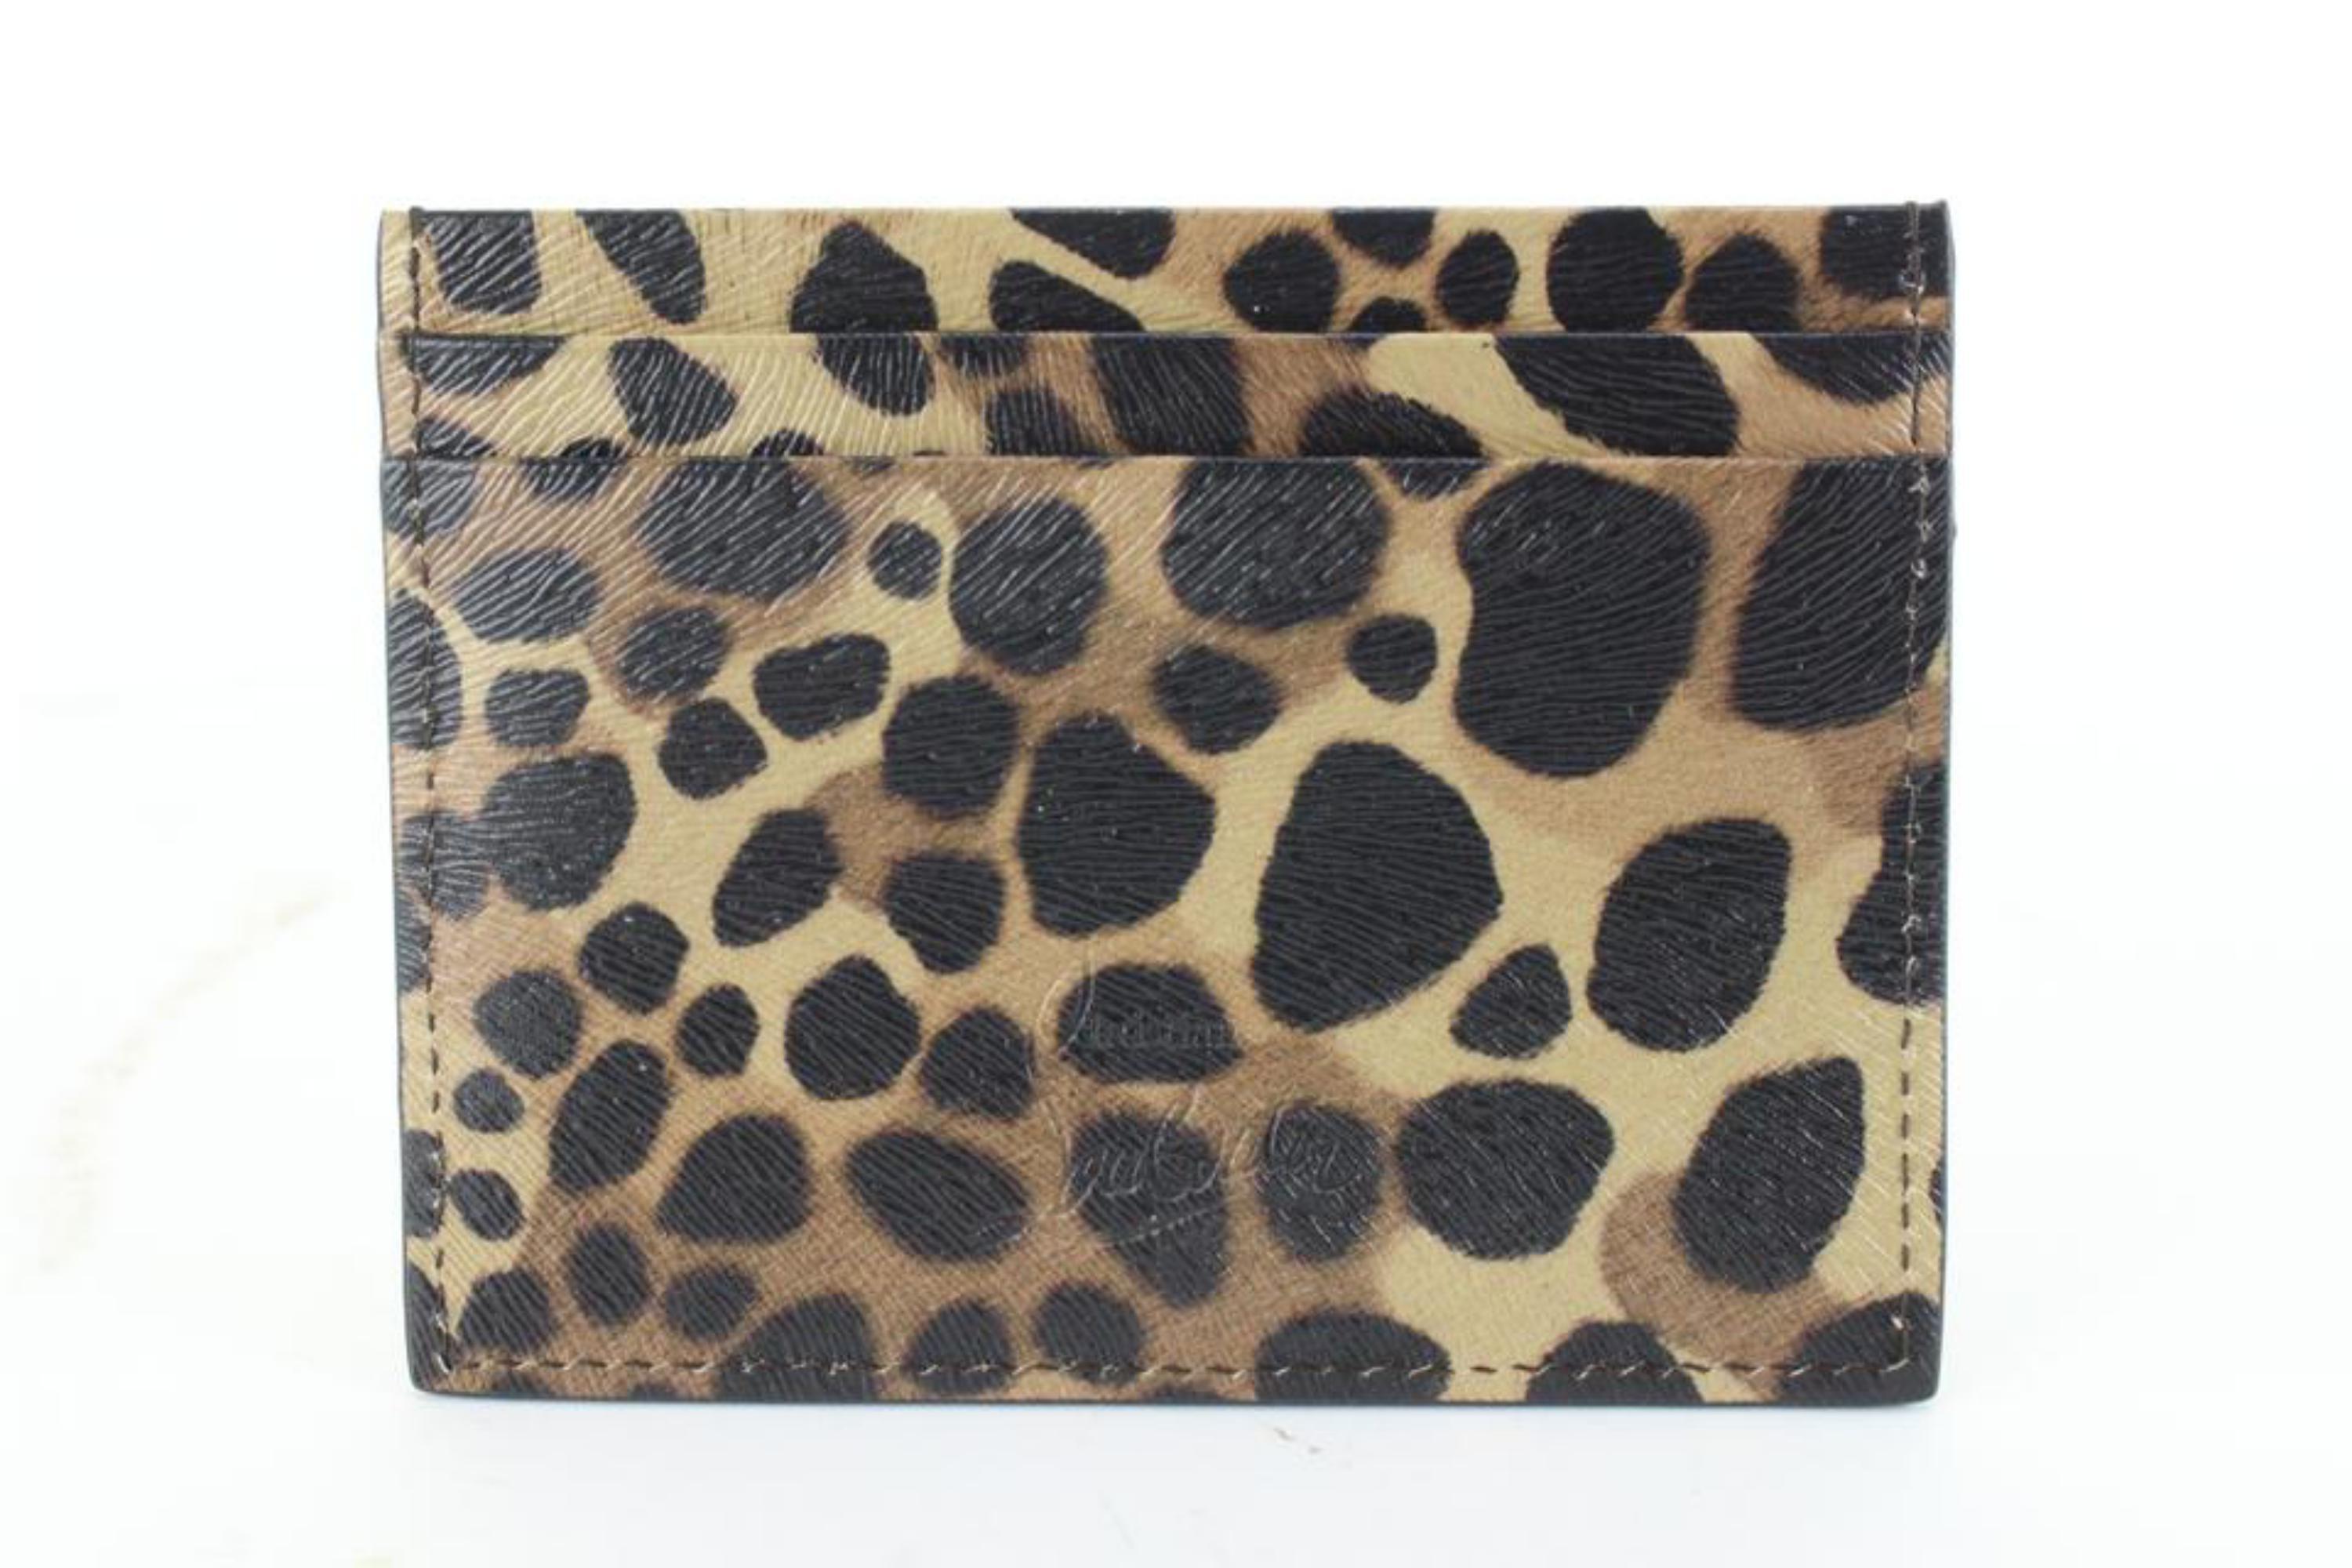 Christian Louboutin Cheetah Leopard Spike Stud Card Holder Wallet 18cl76s 3